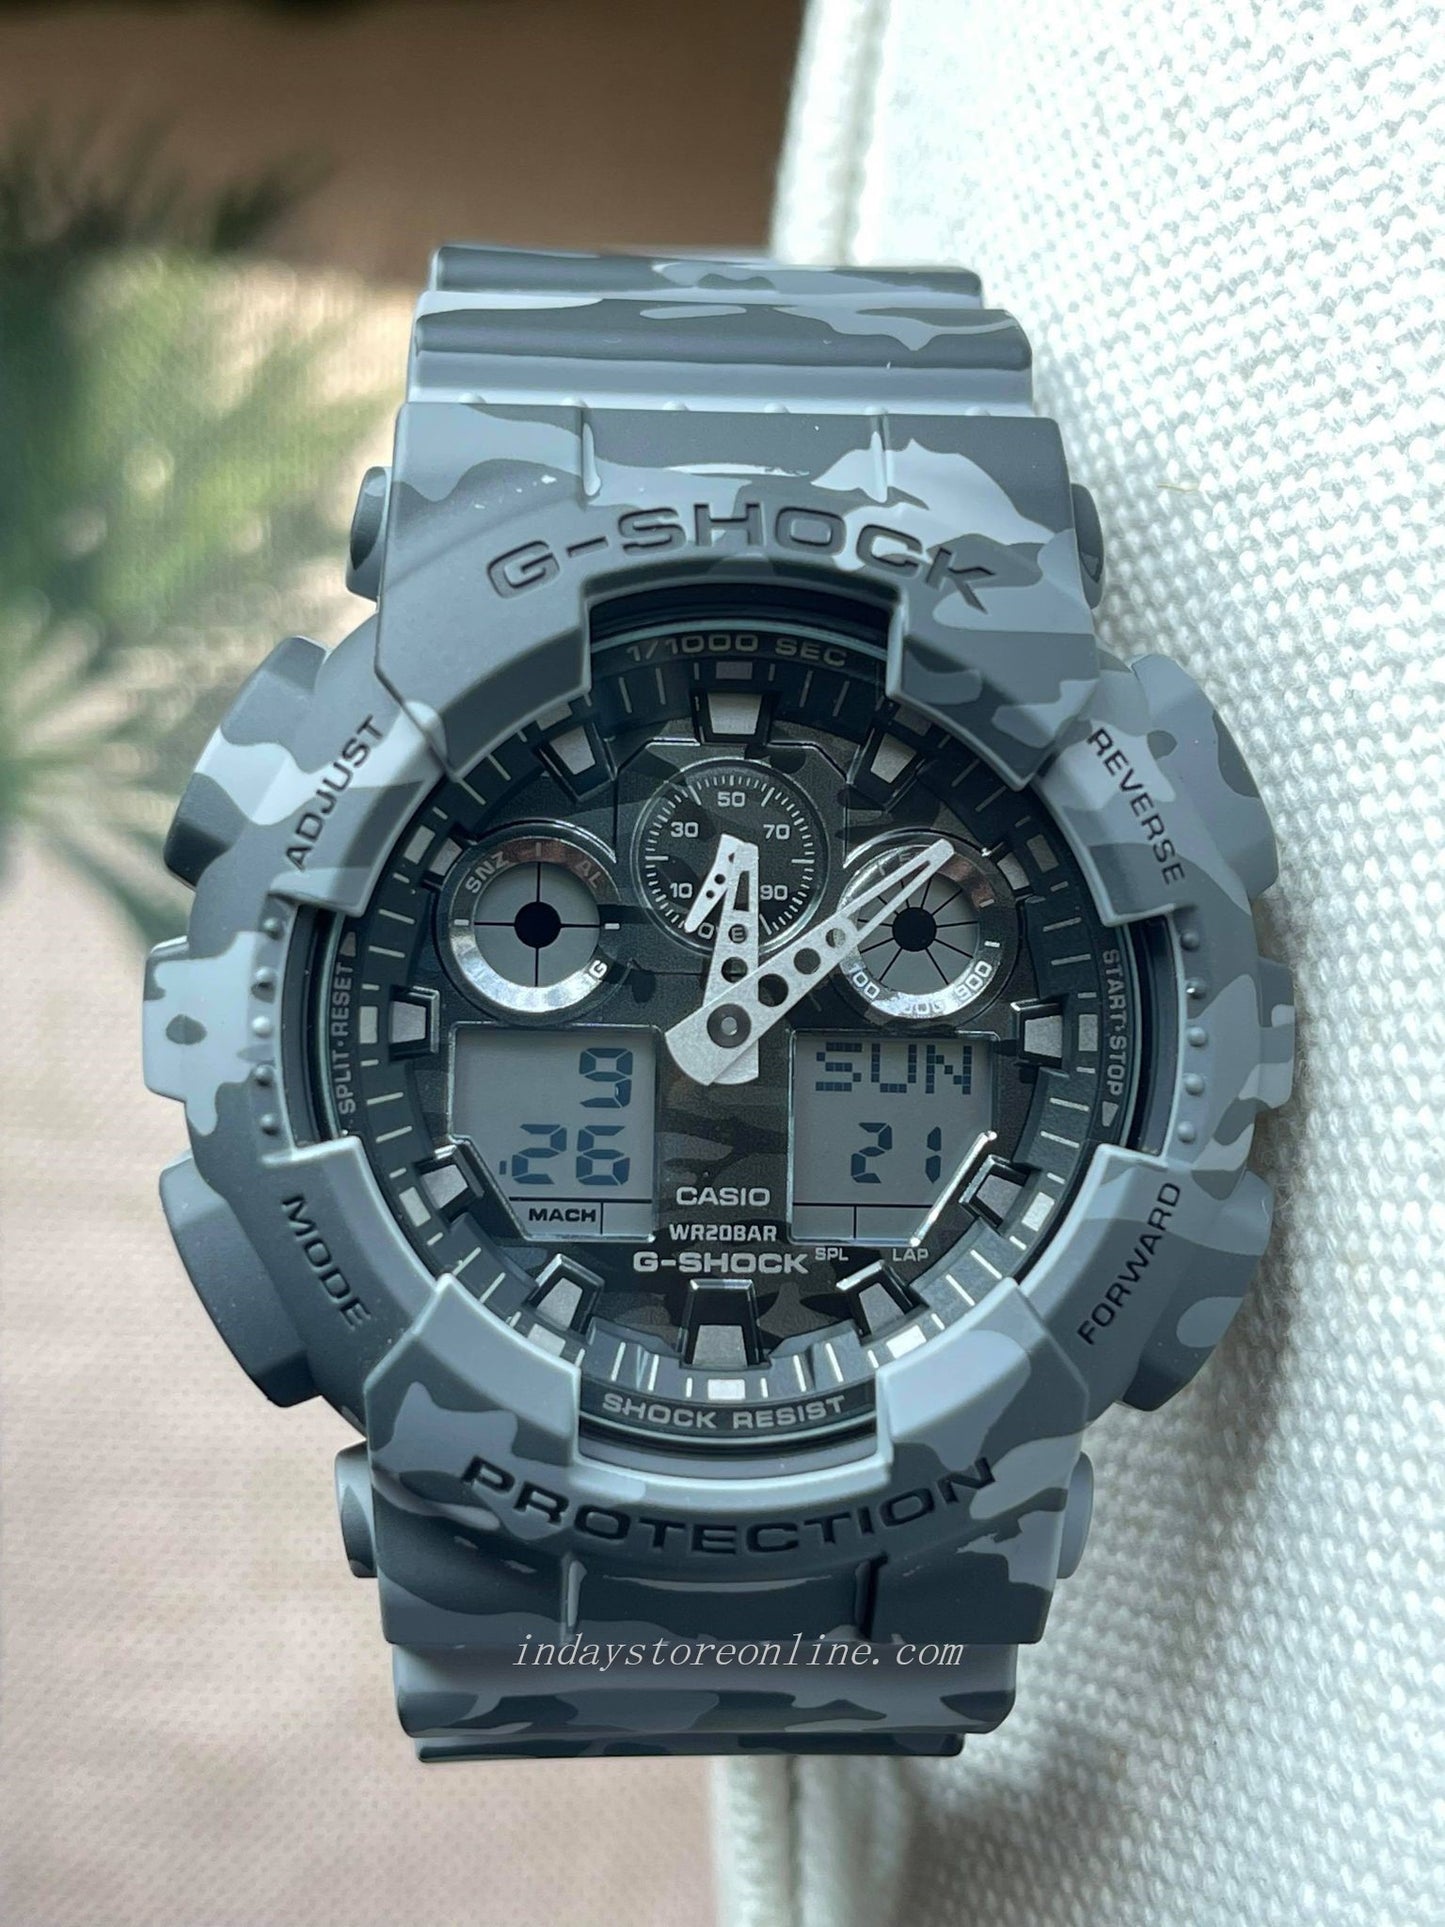 Casio G-Shock Men's Watch GA-100CM-8A